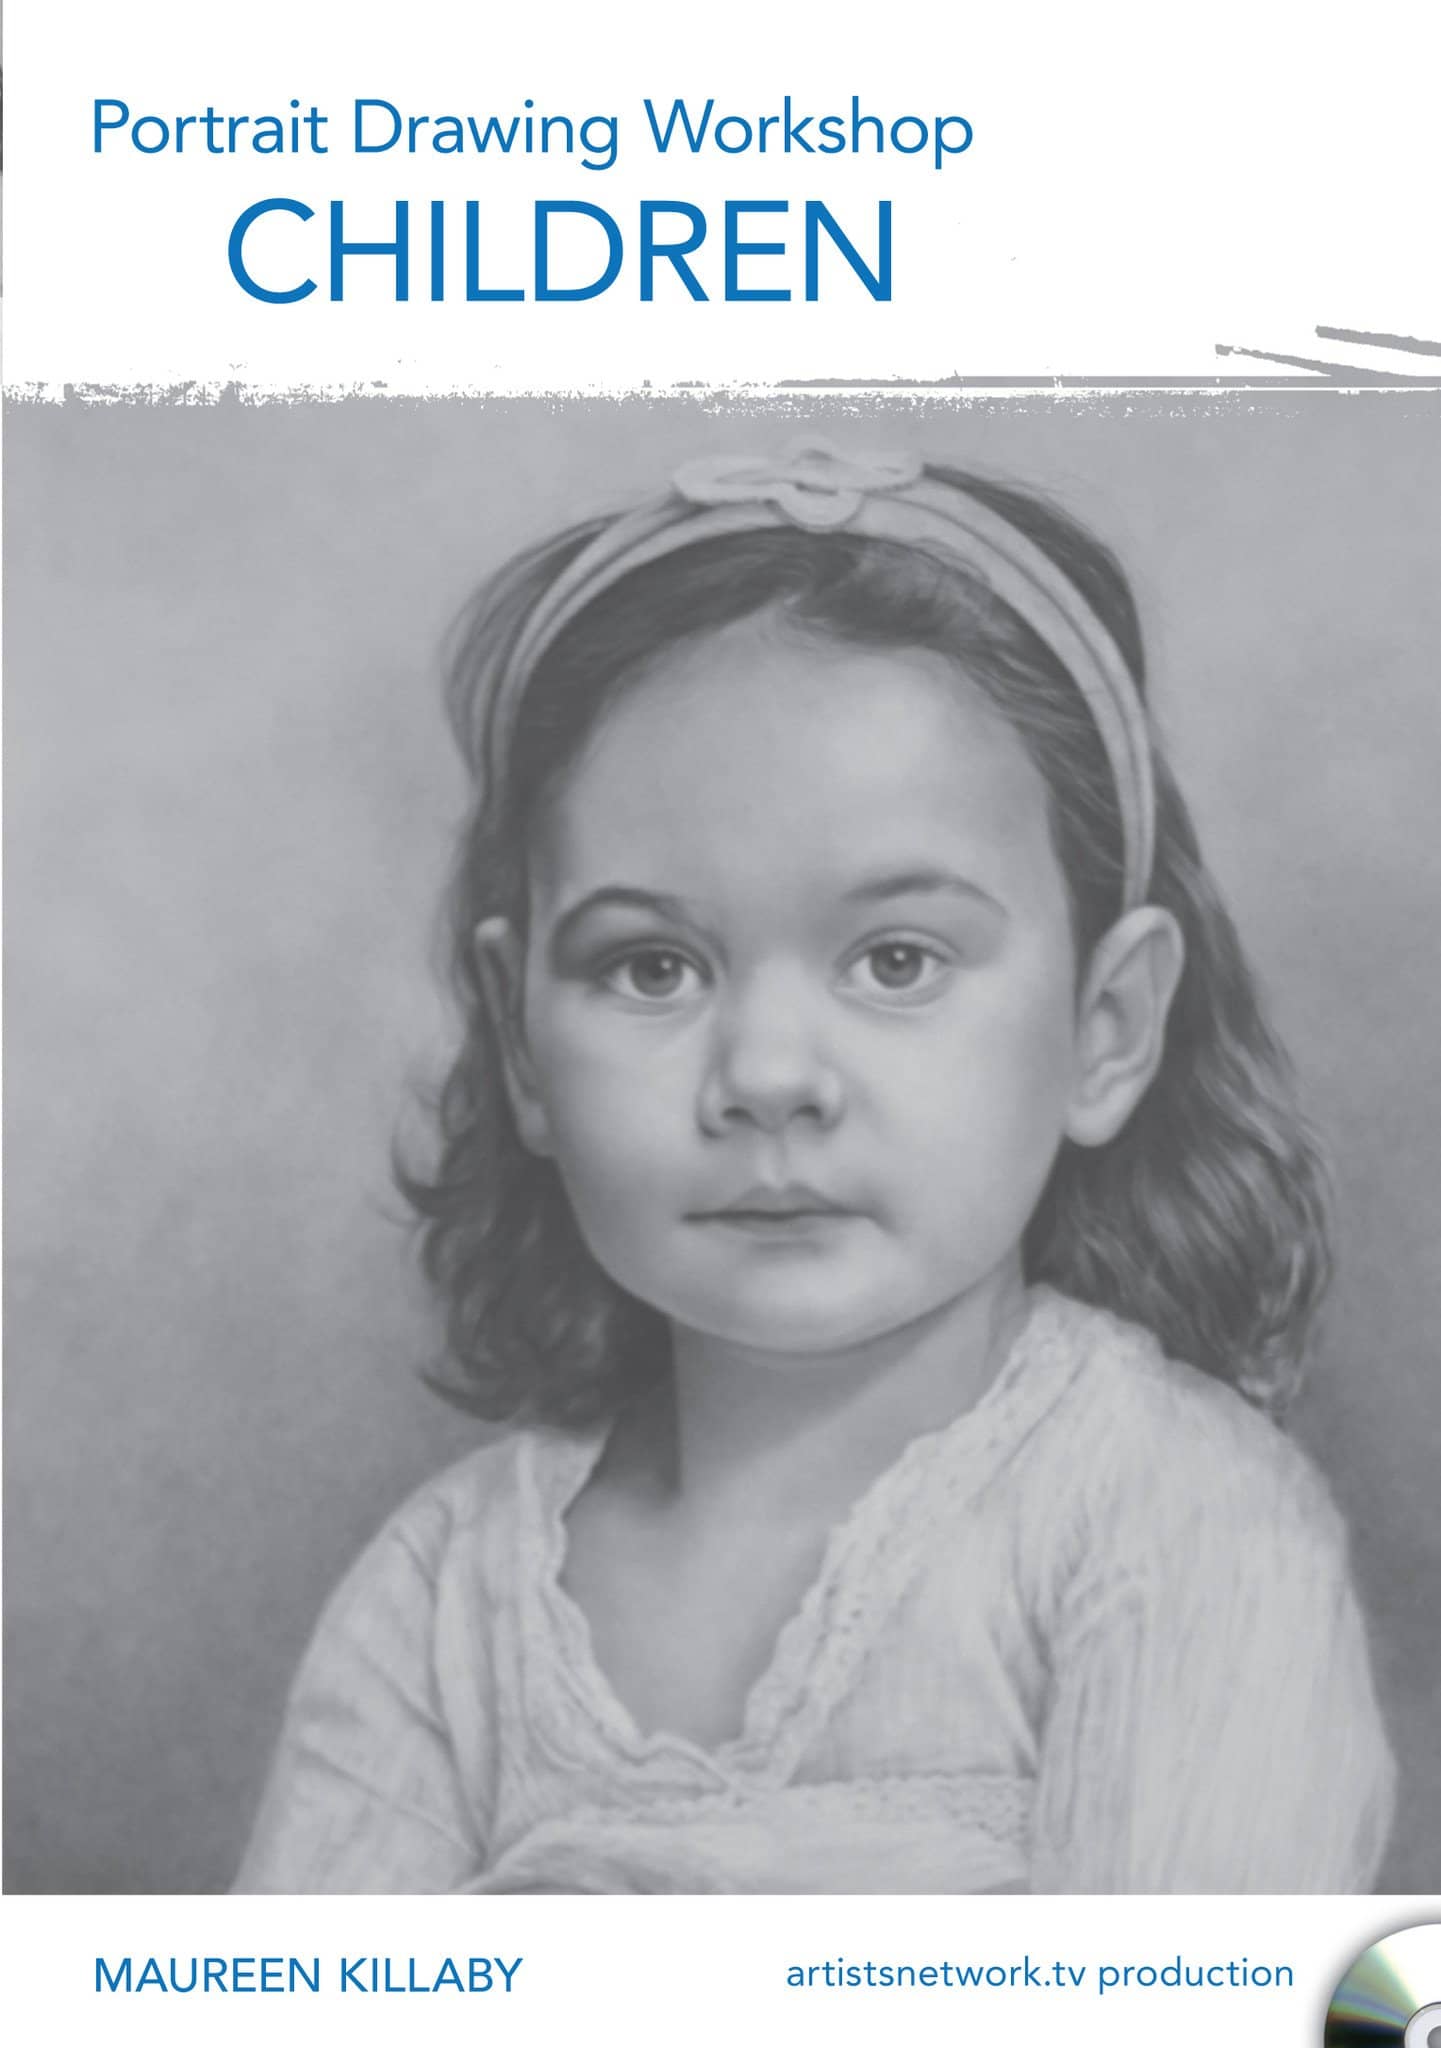 Maureen Killaby: Portrait Drawing Workshop - Children